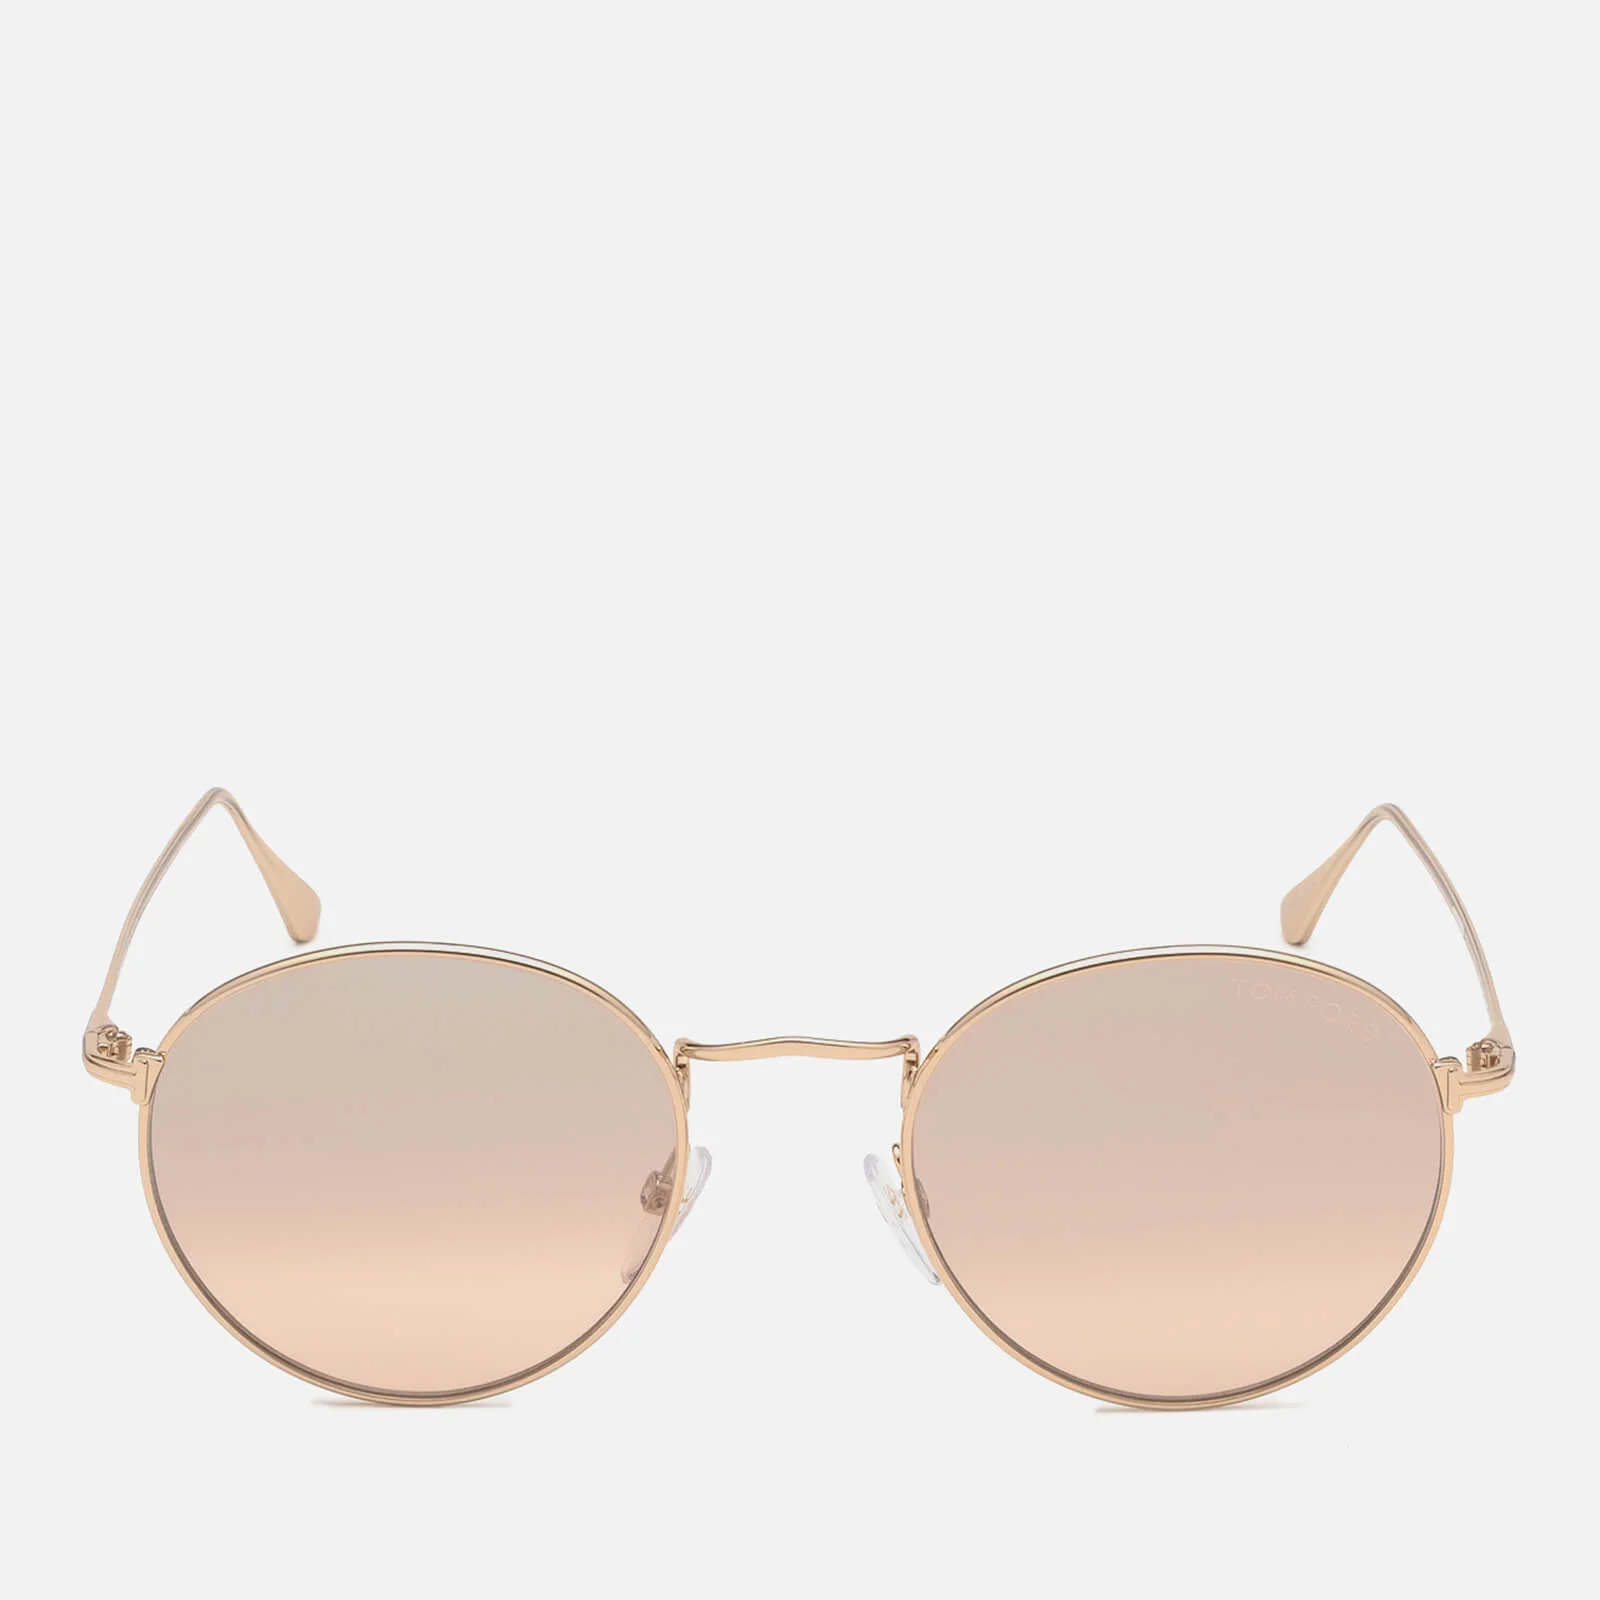 Tom Ford Women's Round Frame Sunglasses - Rose Gold/Green Image 1